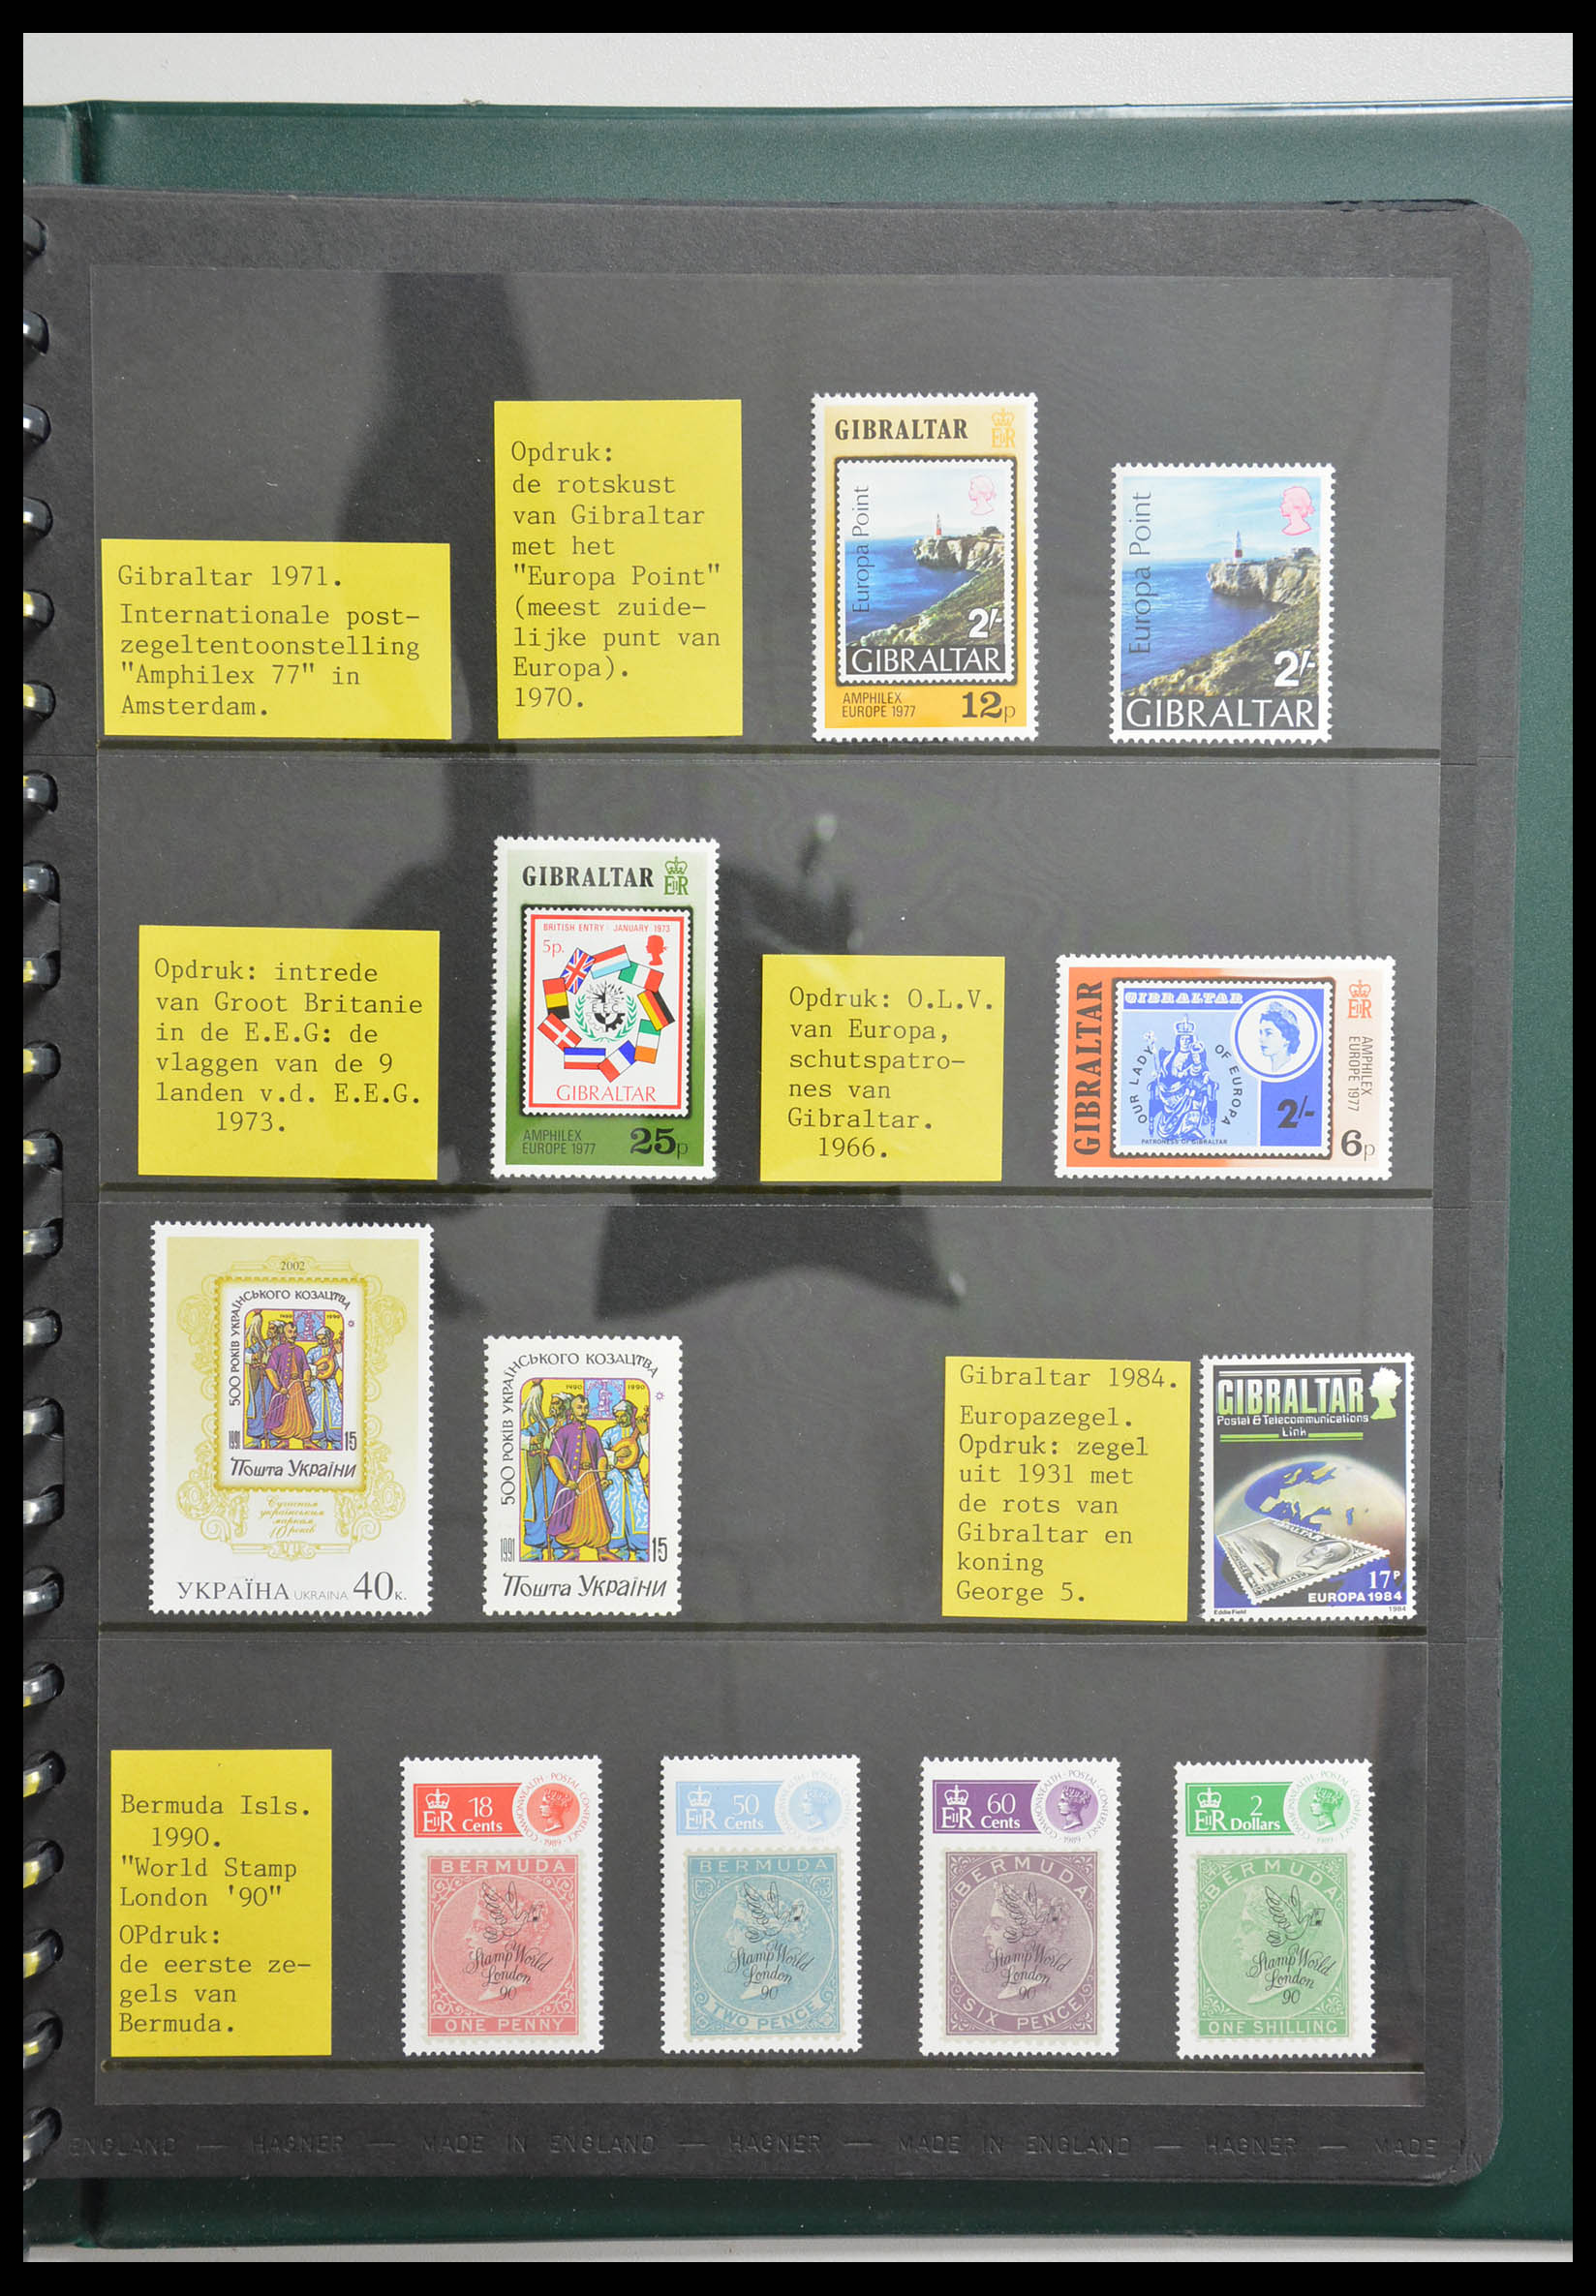 28337 125 - 28337 Postzegel op postzegel 1840-2001.